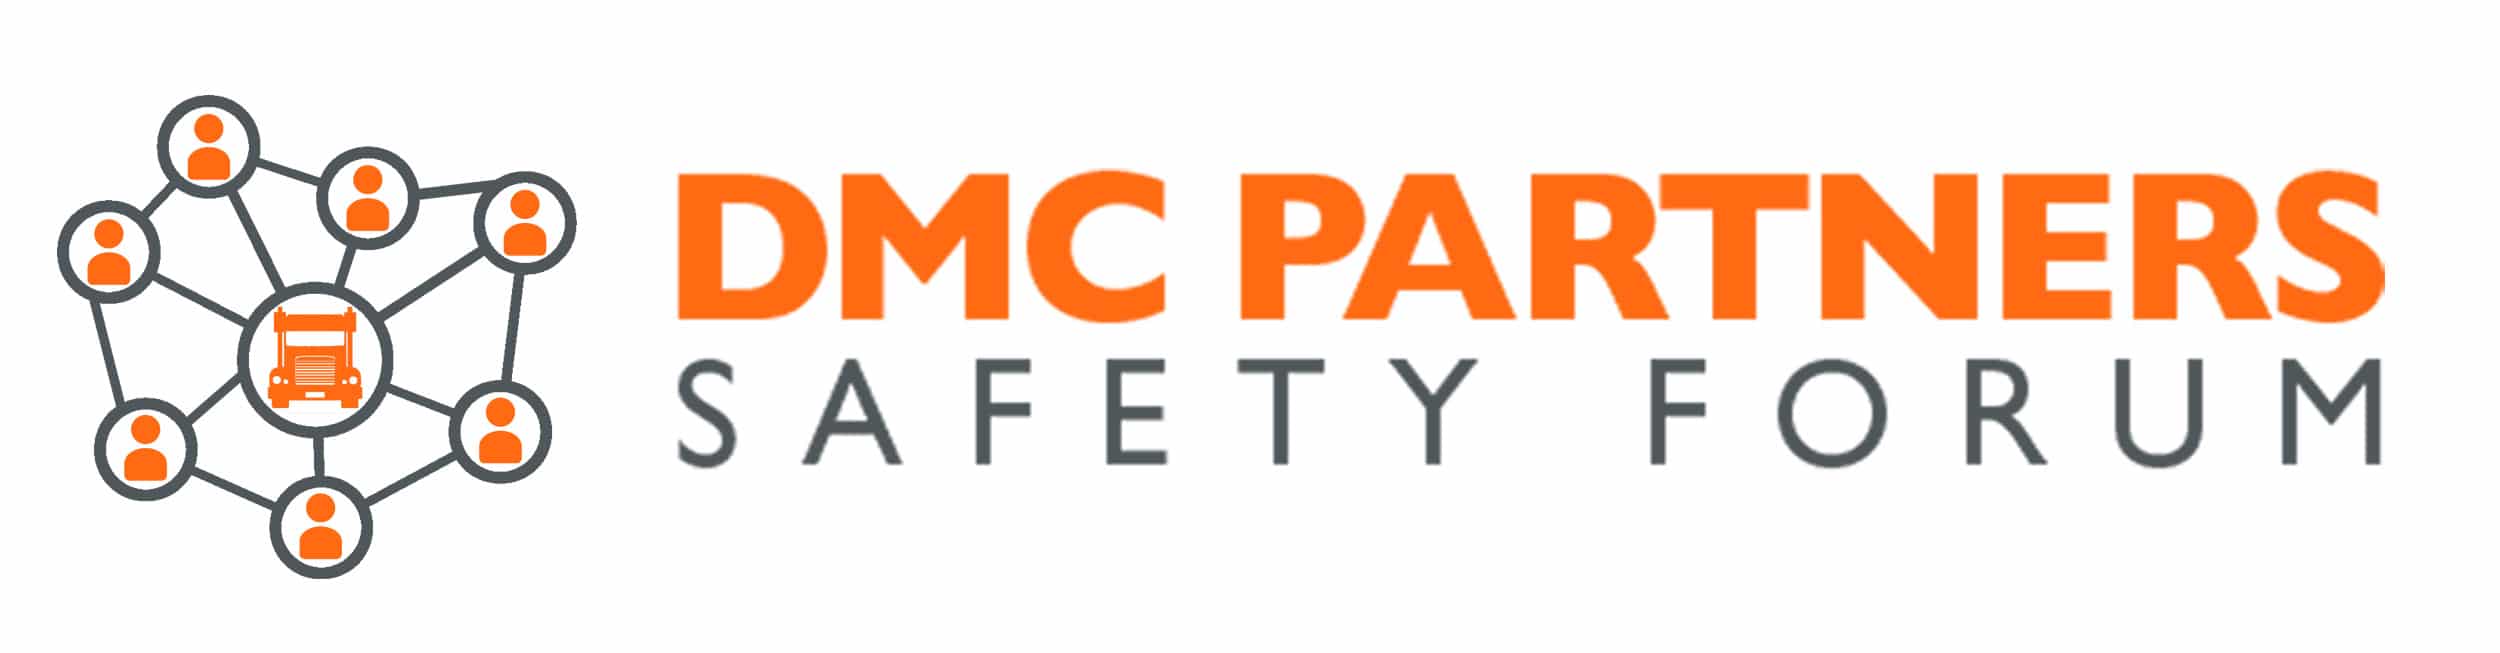 DMC Partners Safety Forum